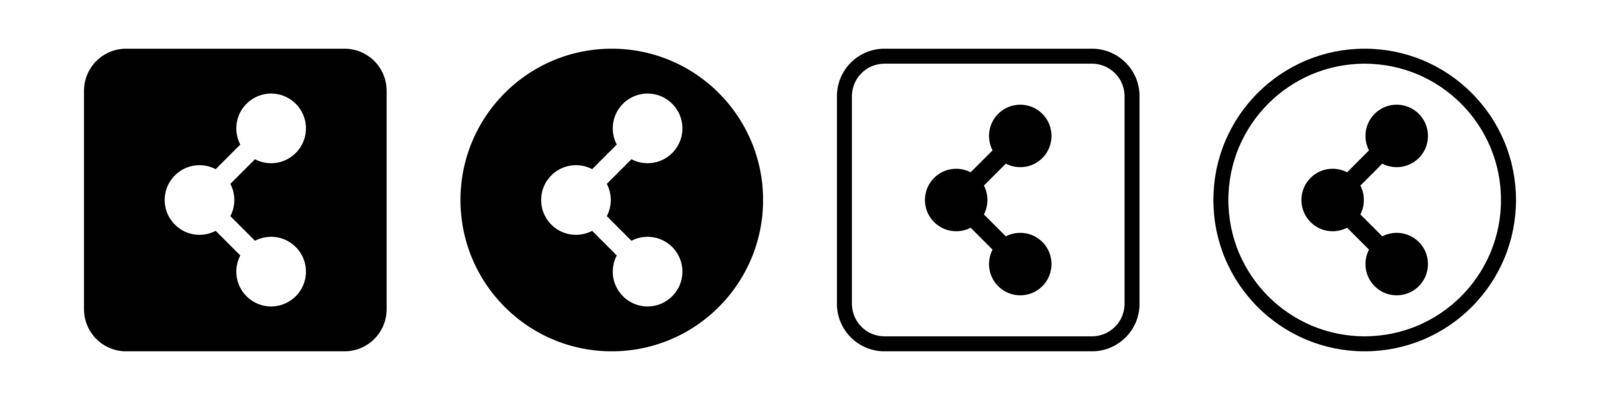 Silhouette icon set of share button. Editable vector.